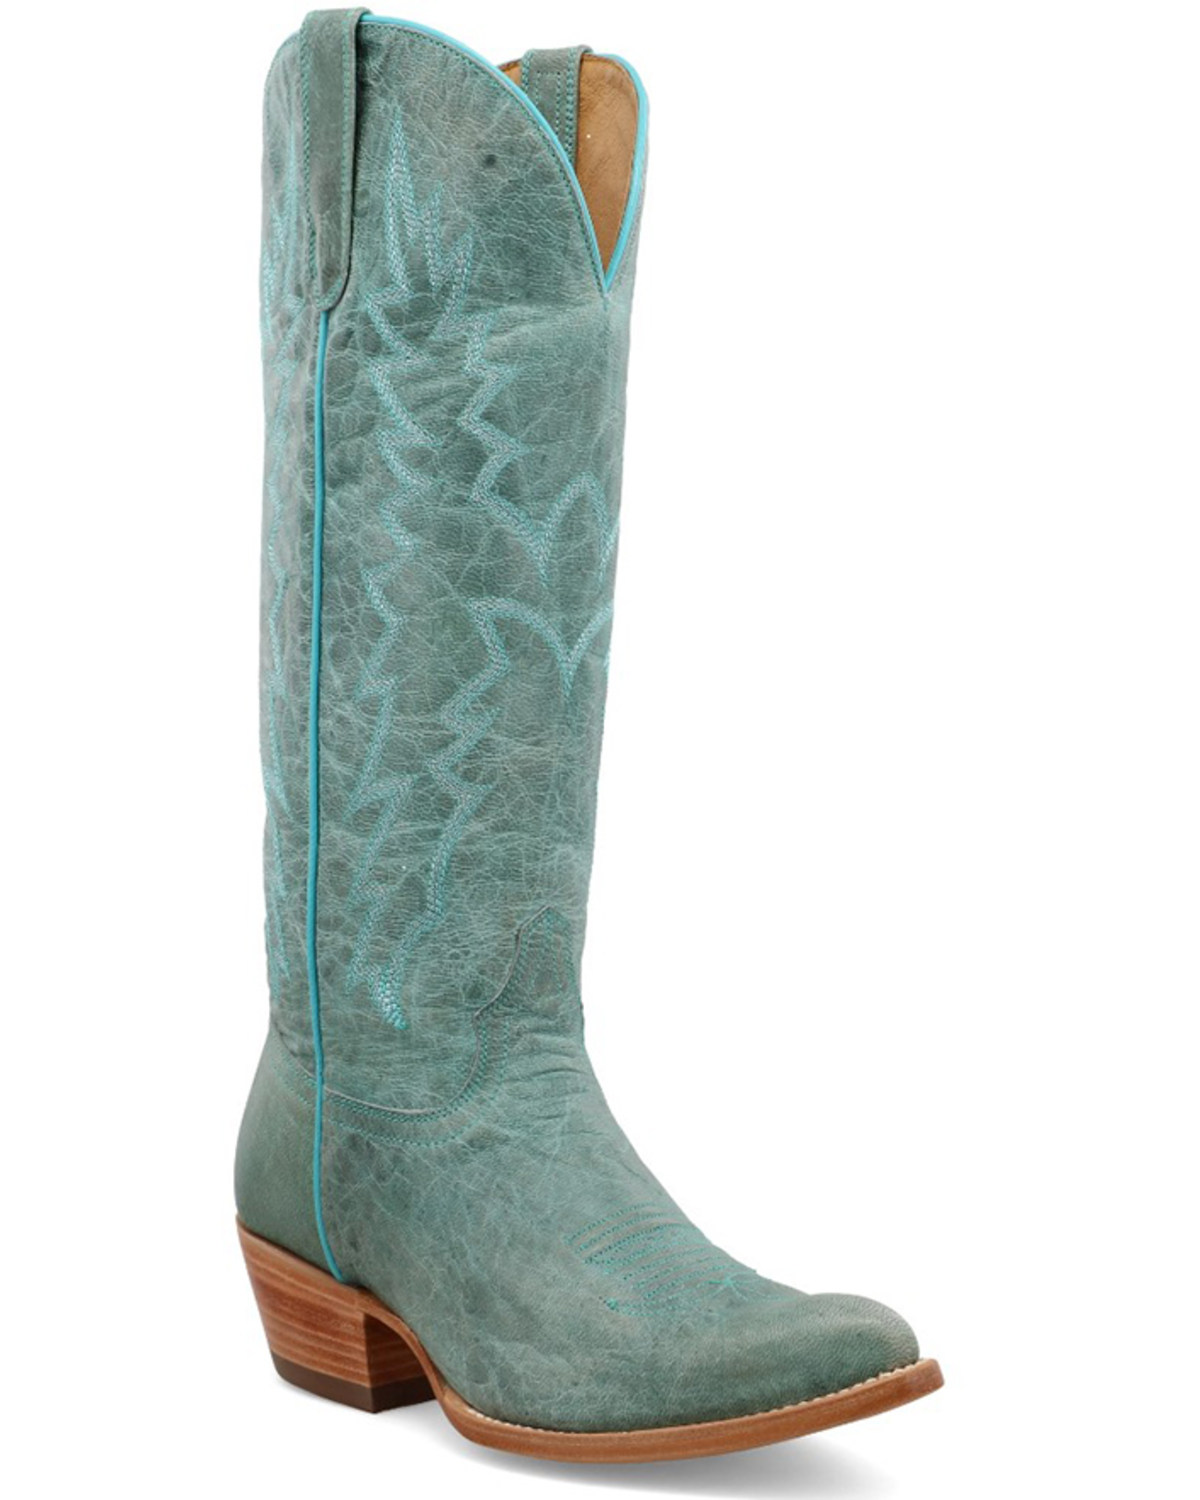 Black Star Women's Sierra Tall Western Boots - Pointed Toe